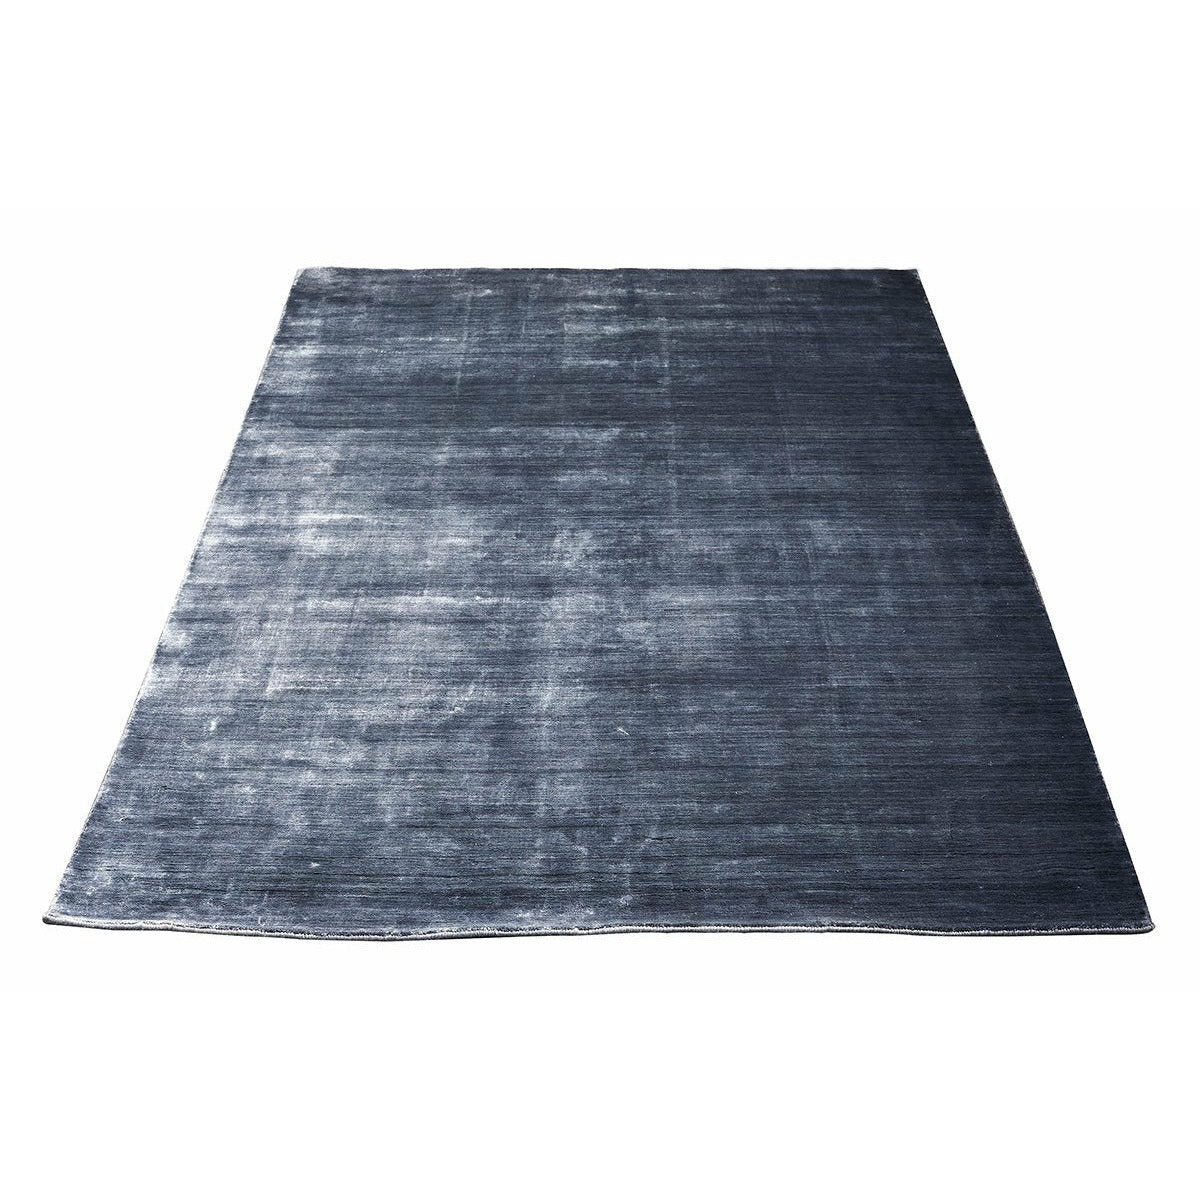 Massimo Bambus Teppich Steel Black, 200x300 cm